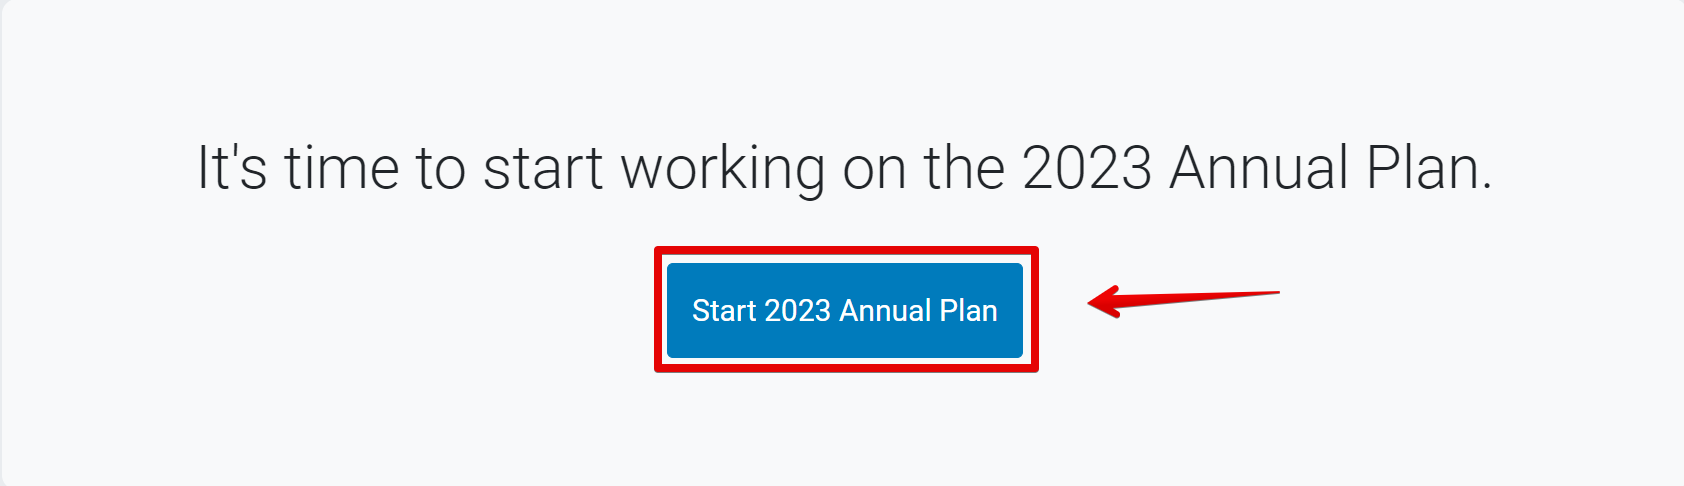 Start the Annual Plan Button